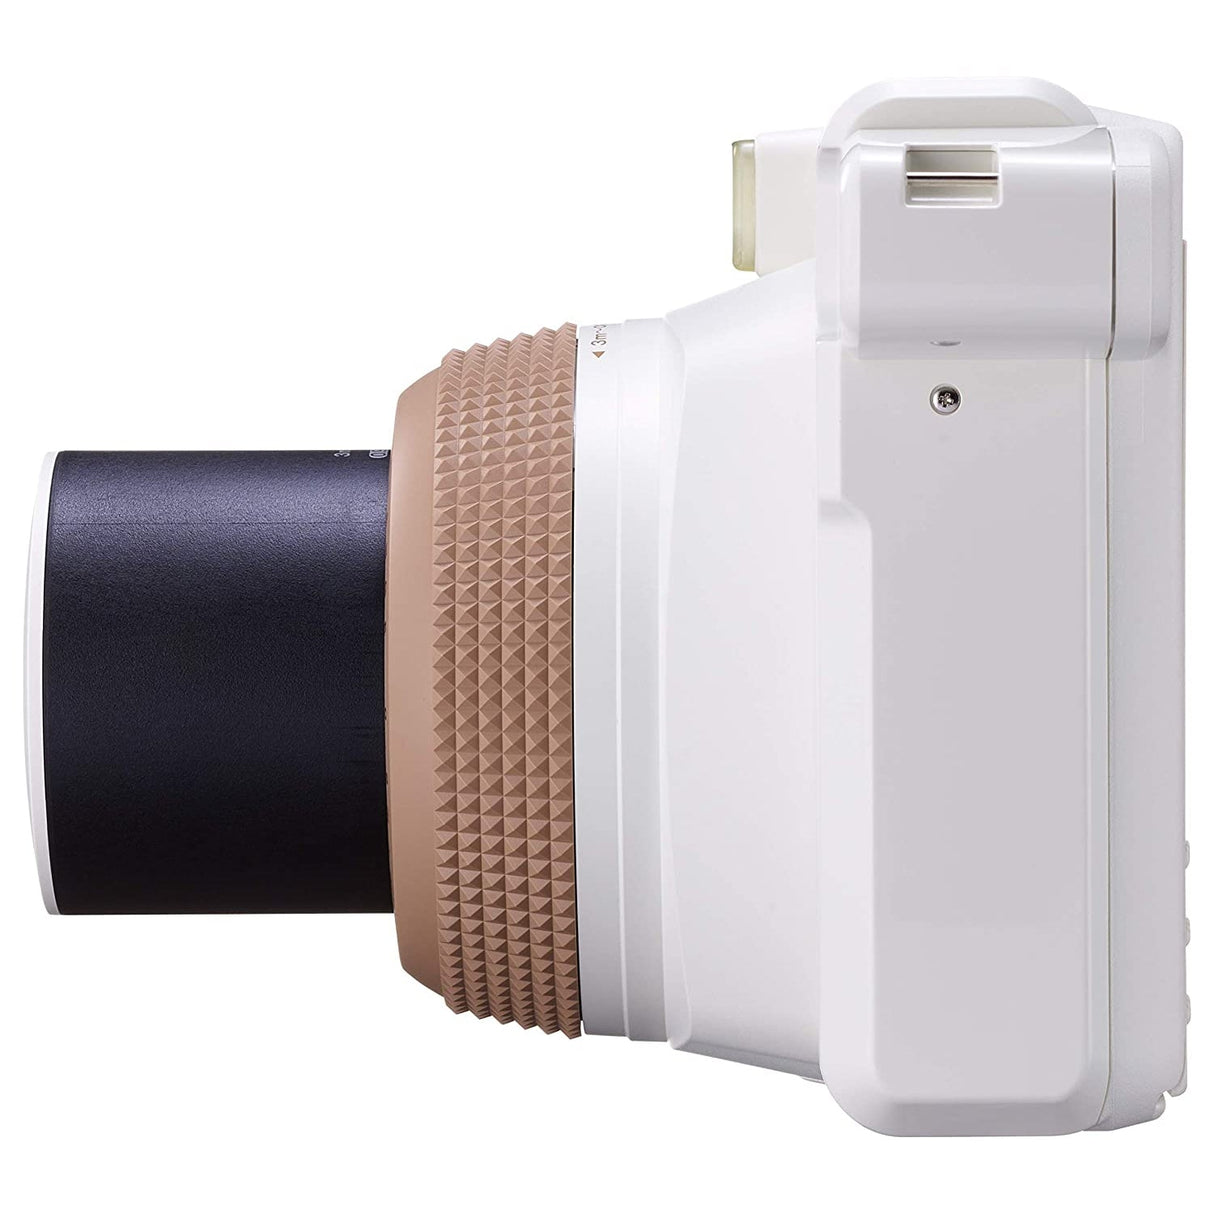 FUJIFILM Instax Wide 300 Instant Camera White